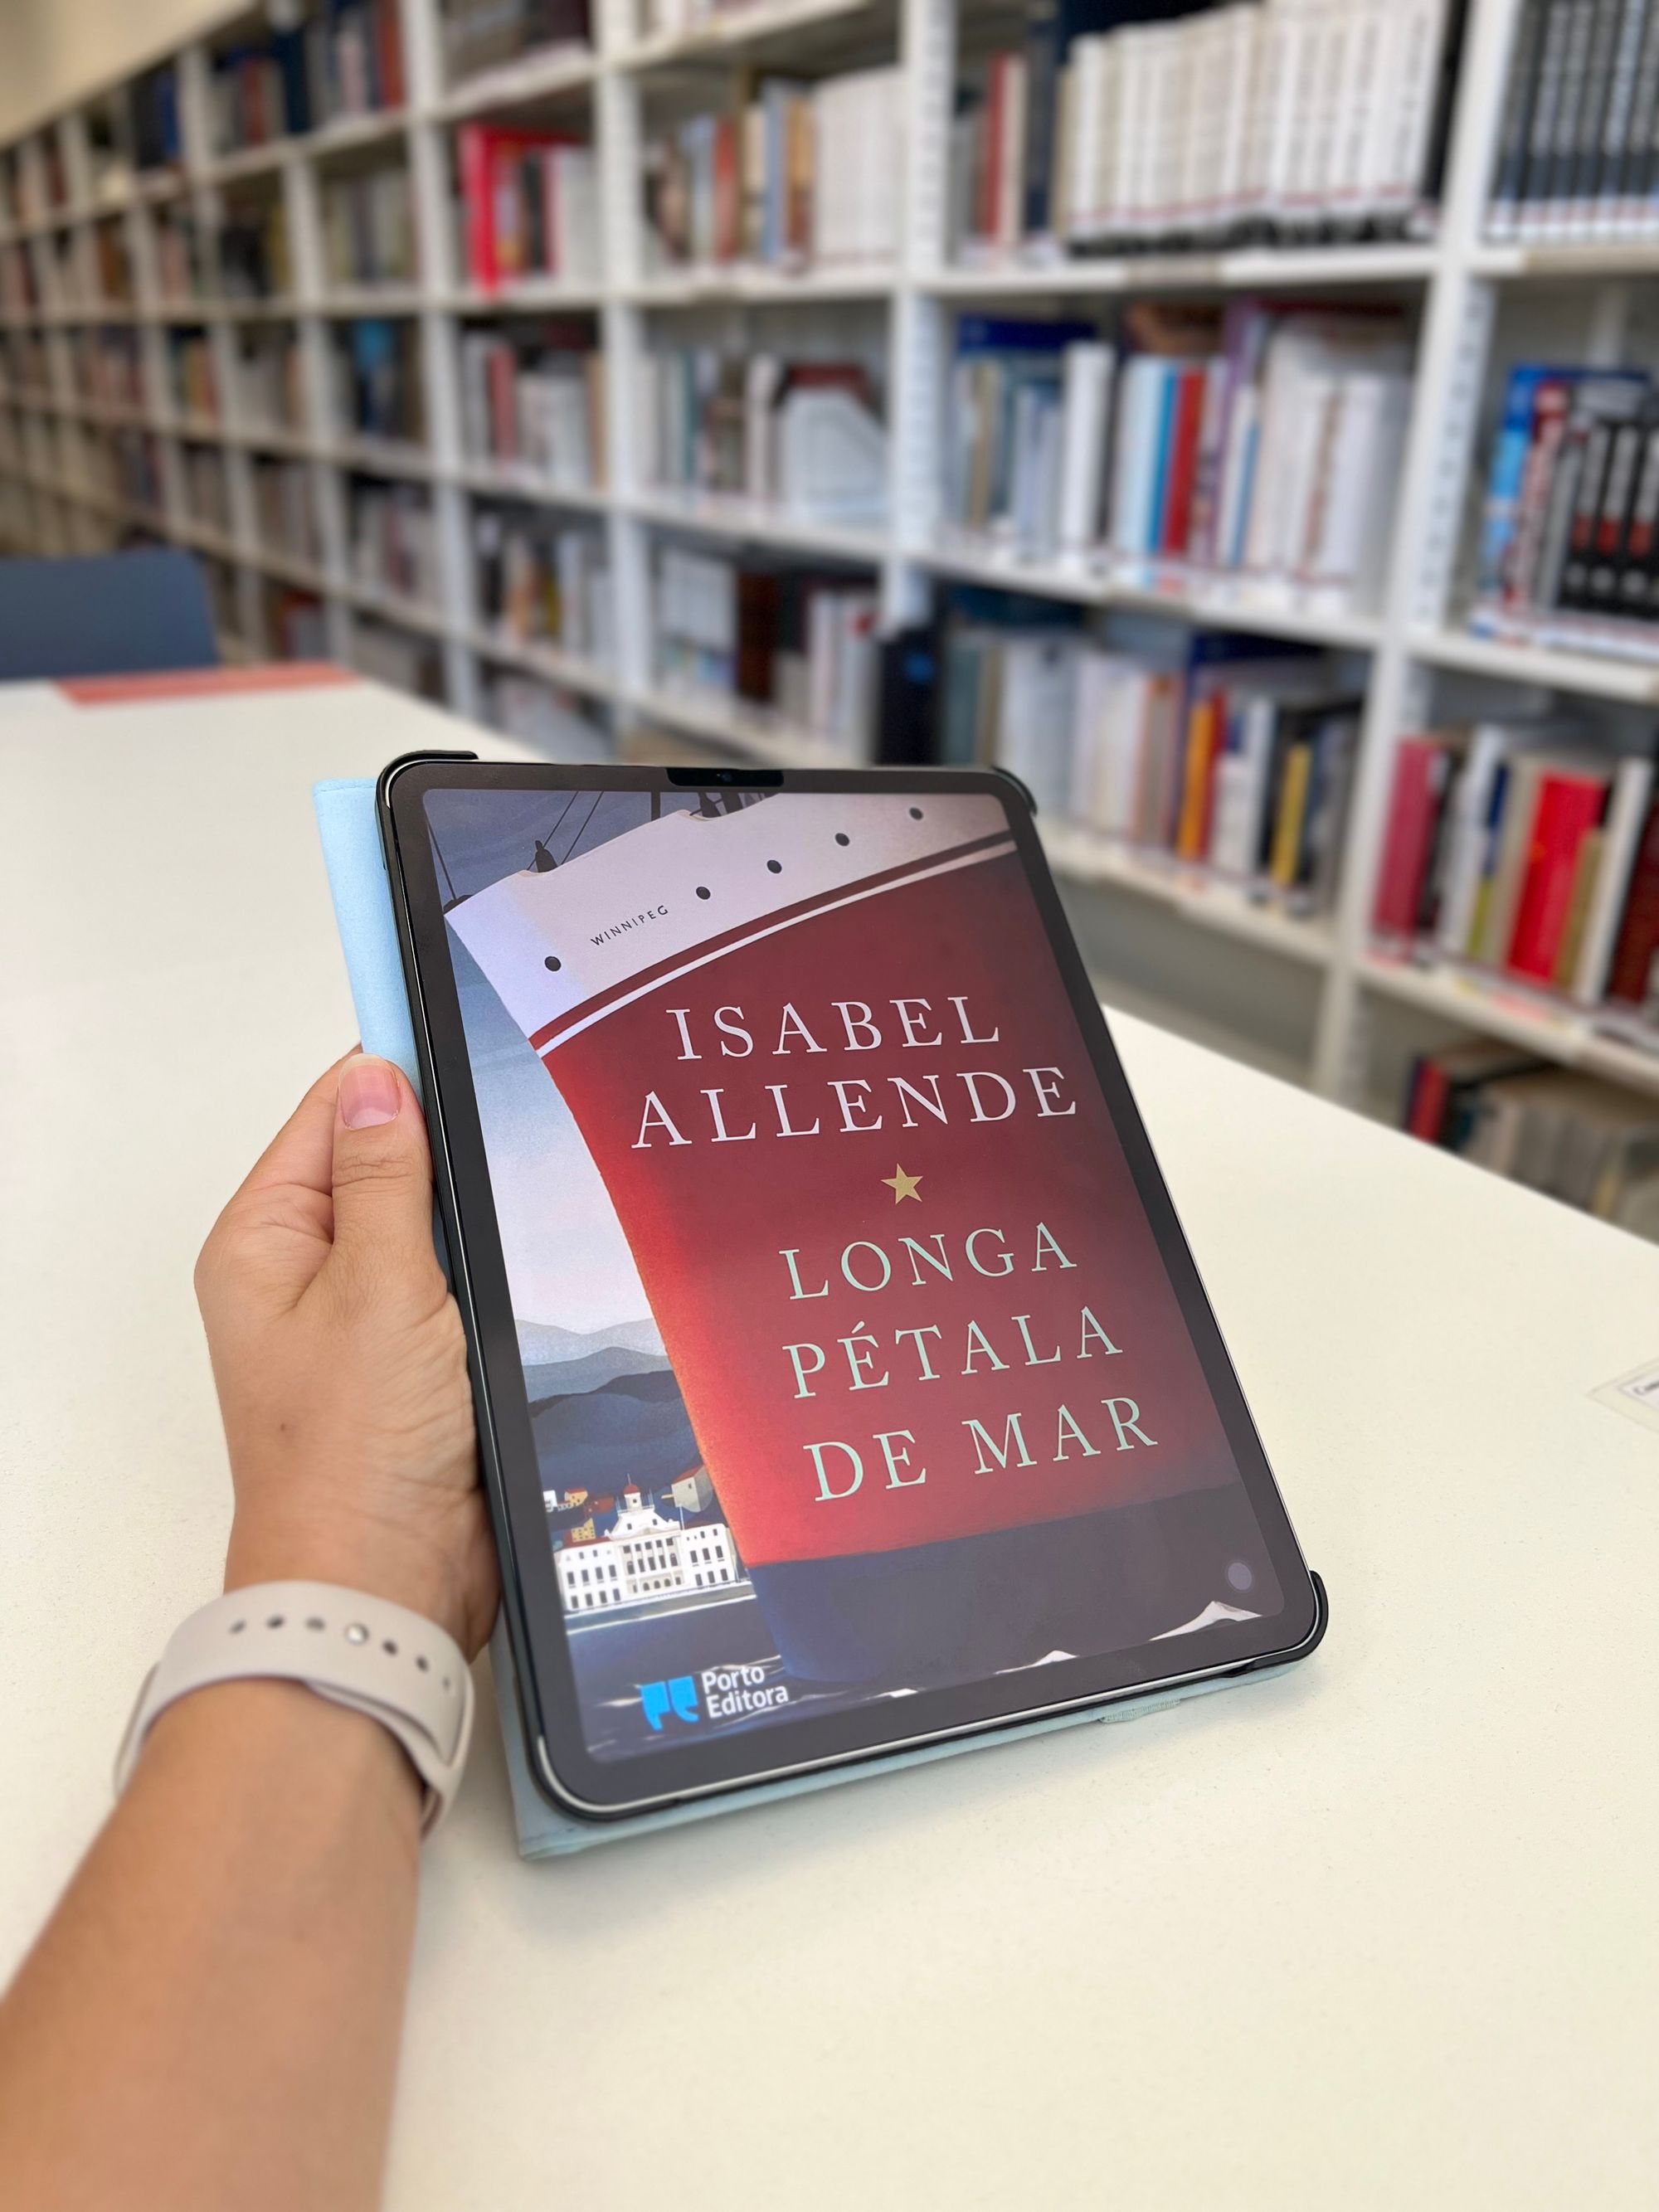 Longa pétala de mar - Isabel Allende